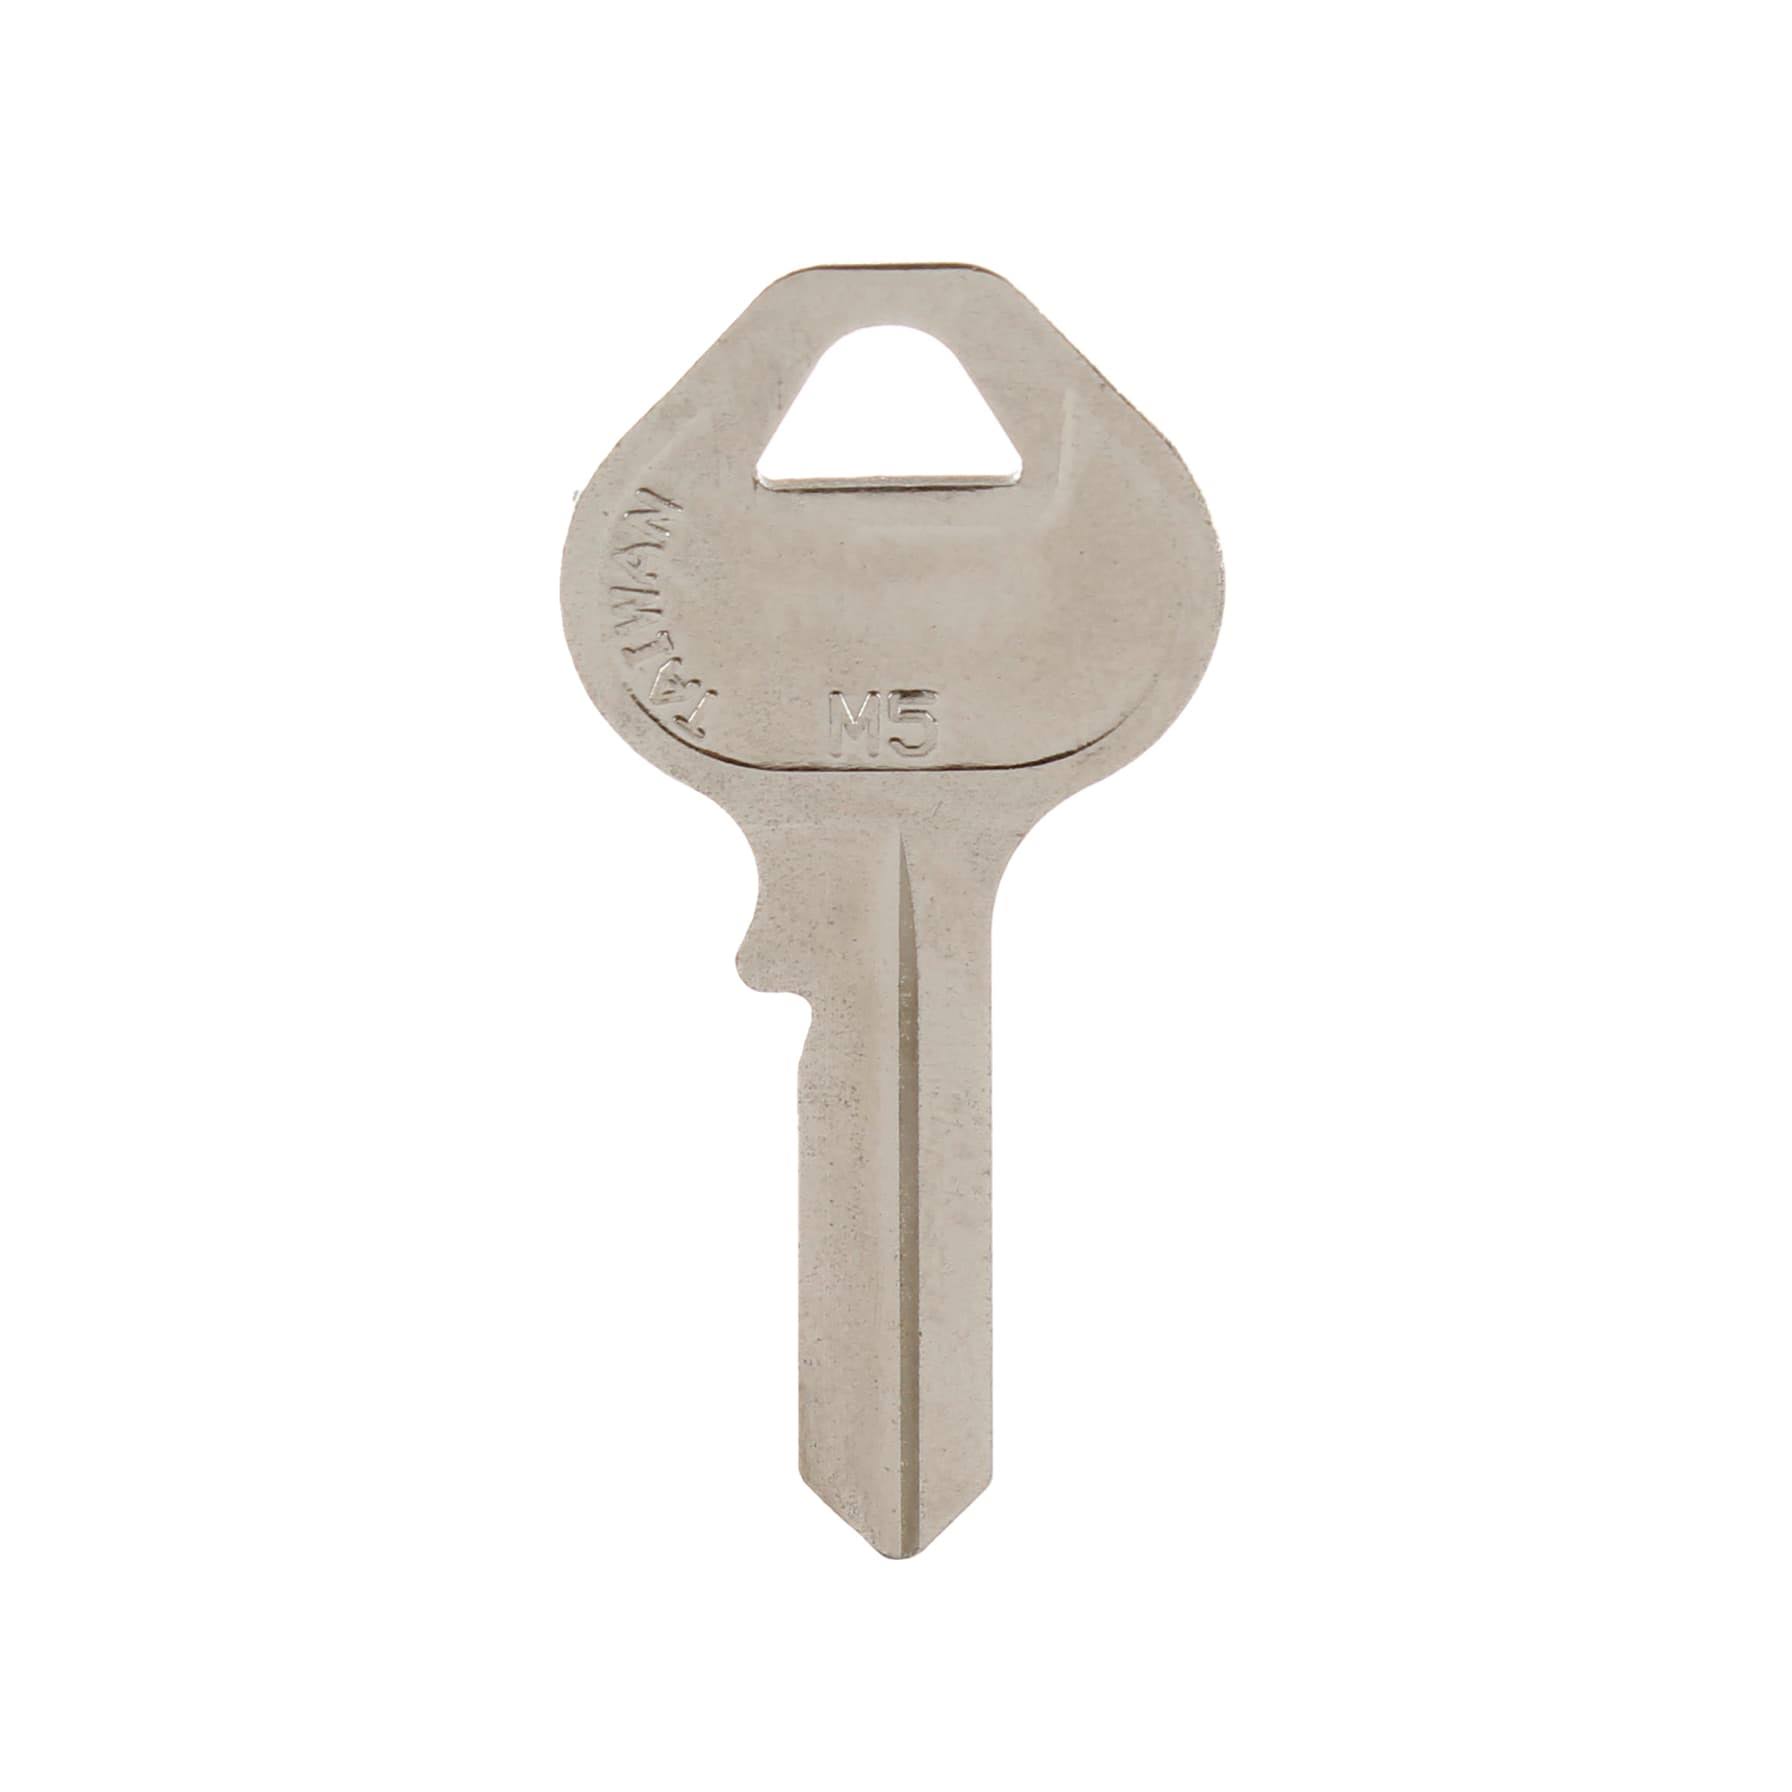 Hy Ko M5 Blank Master Lock Key